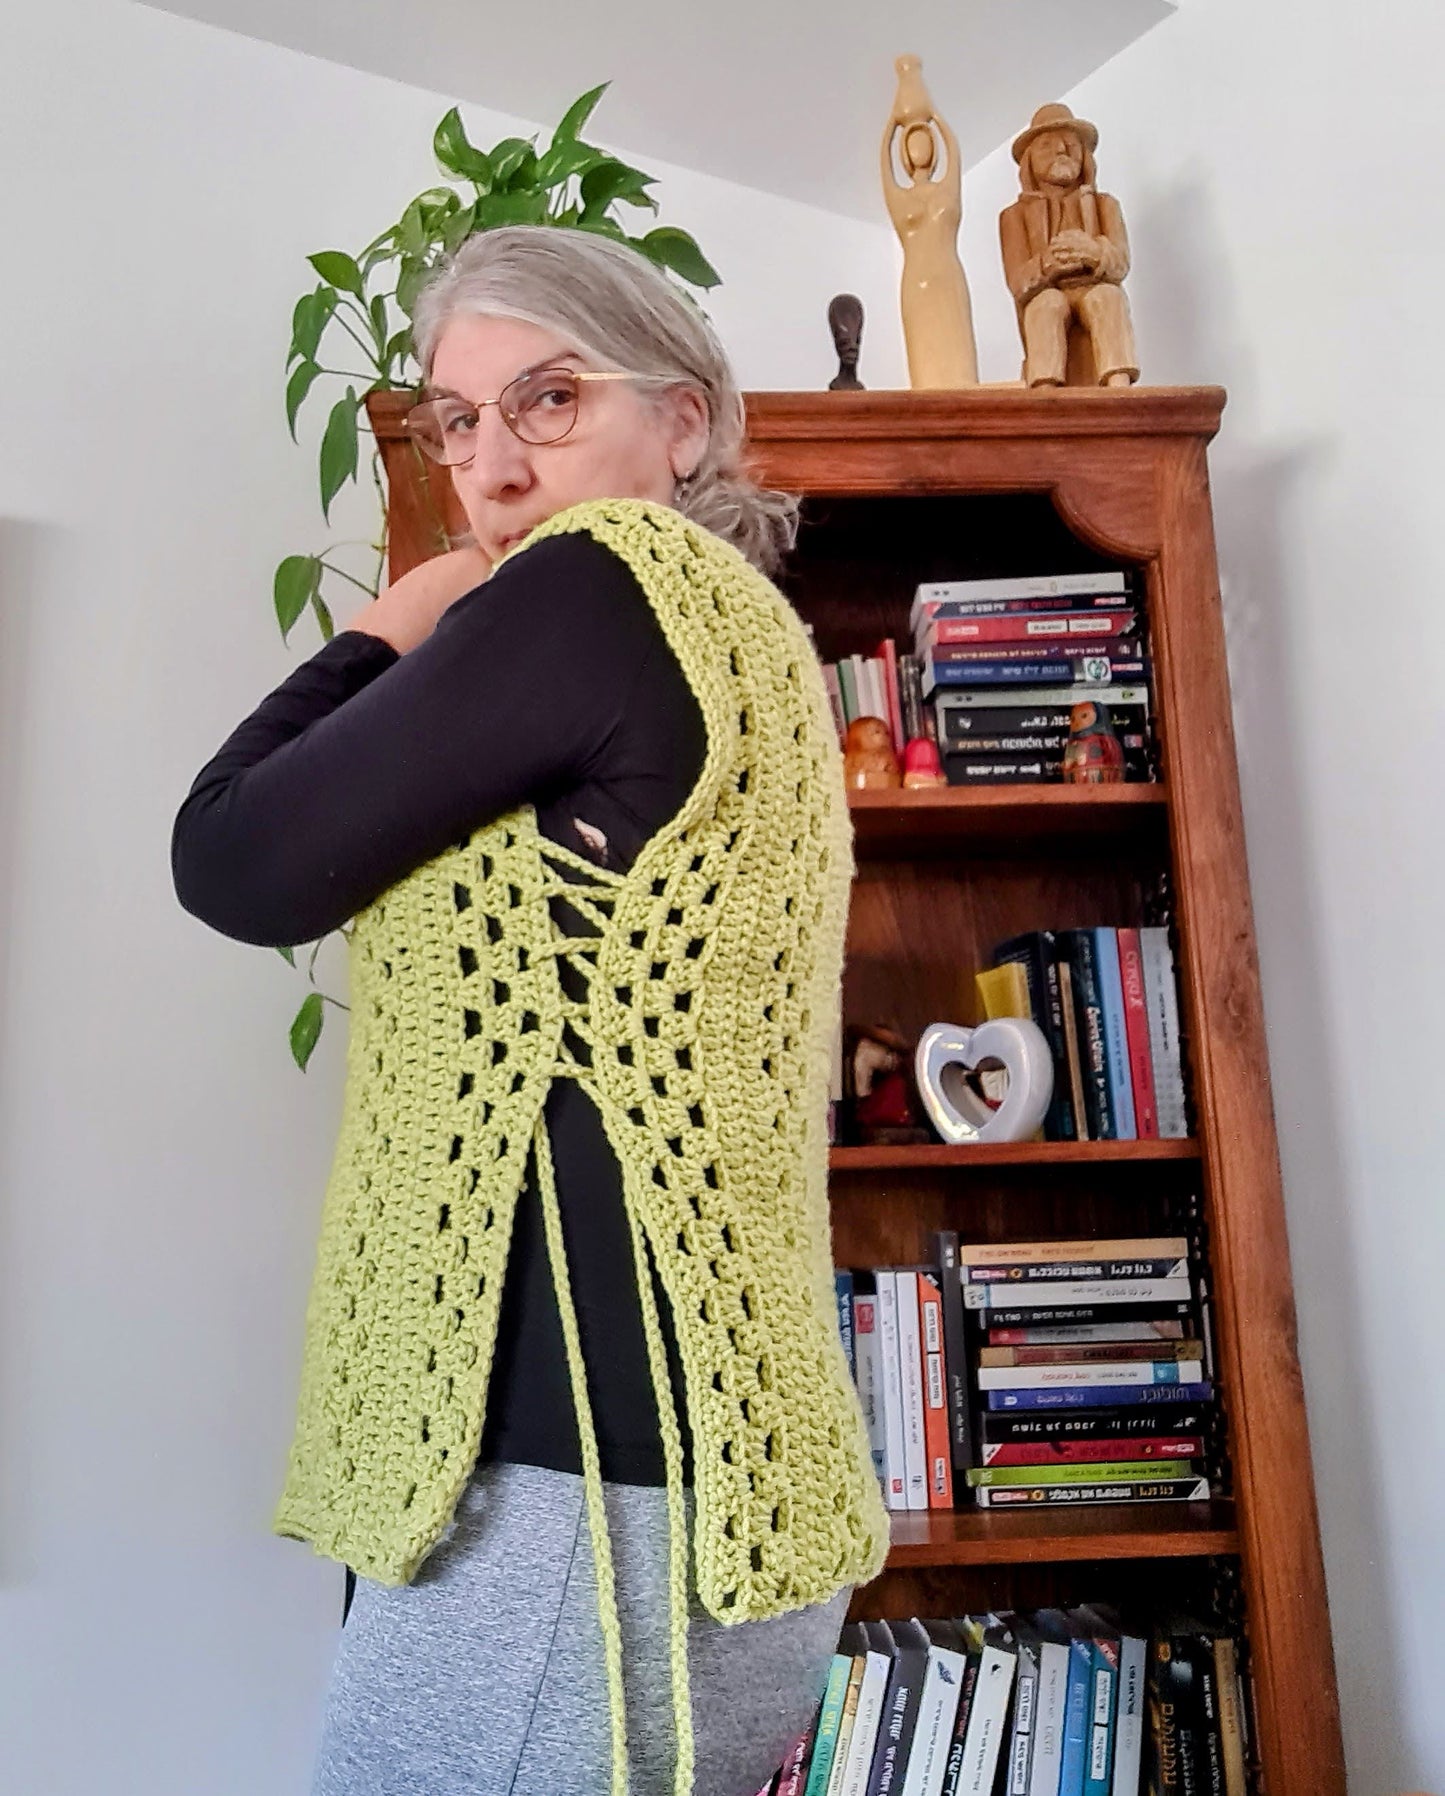 Granny Chic Vest Crochet Pattern by Sandra Regev